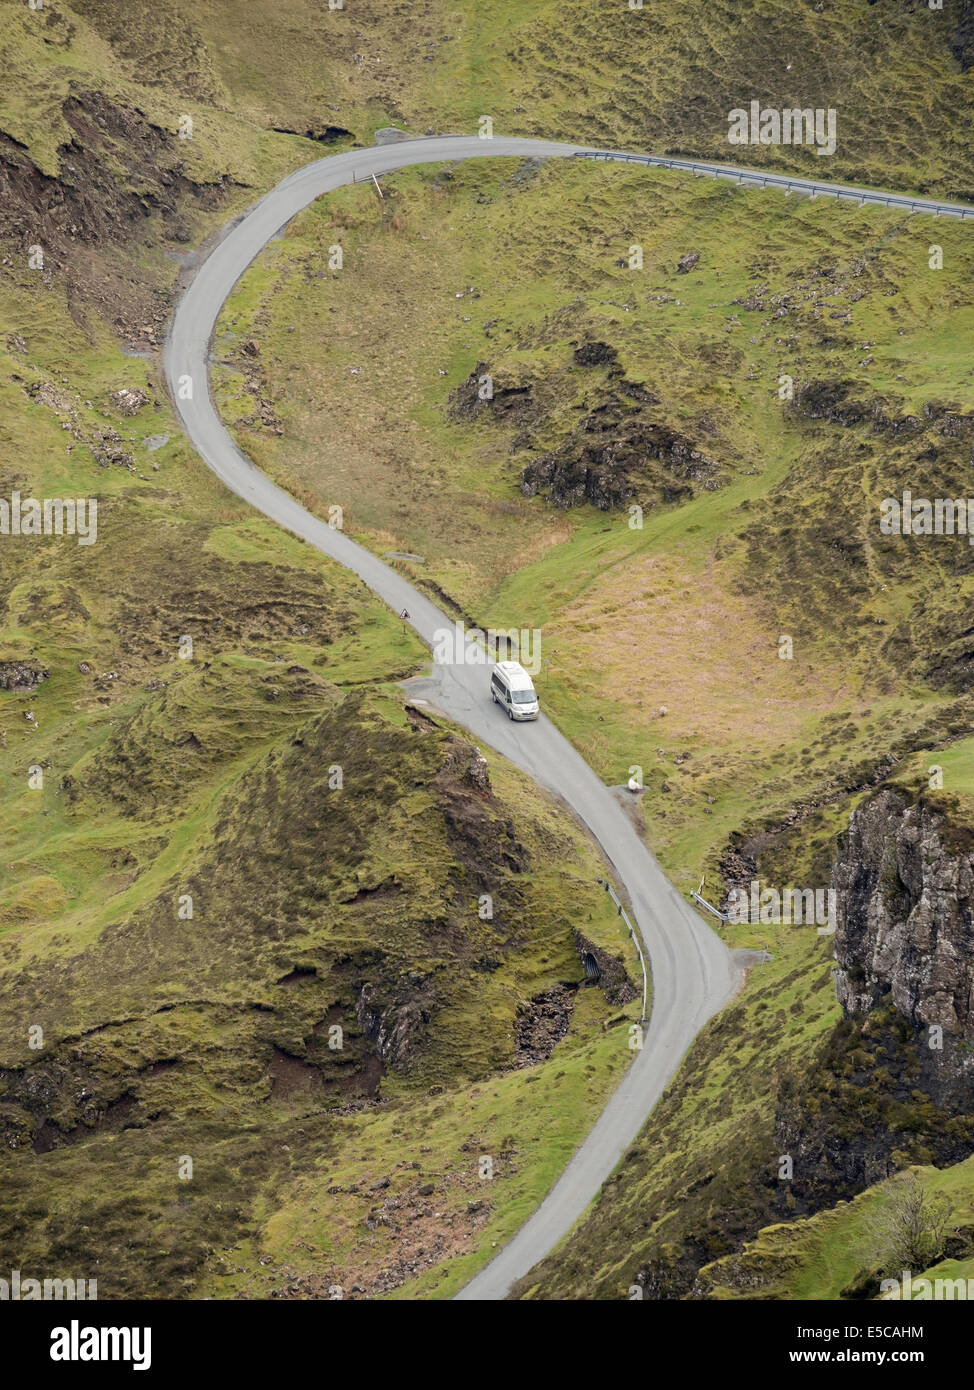 Looking down on small camper van on steep, winding, single track mountain road, Trotternish, Isle of Skye, Scotland, UK Stock Photo